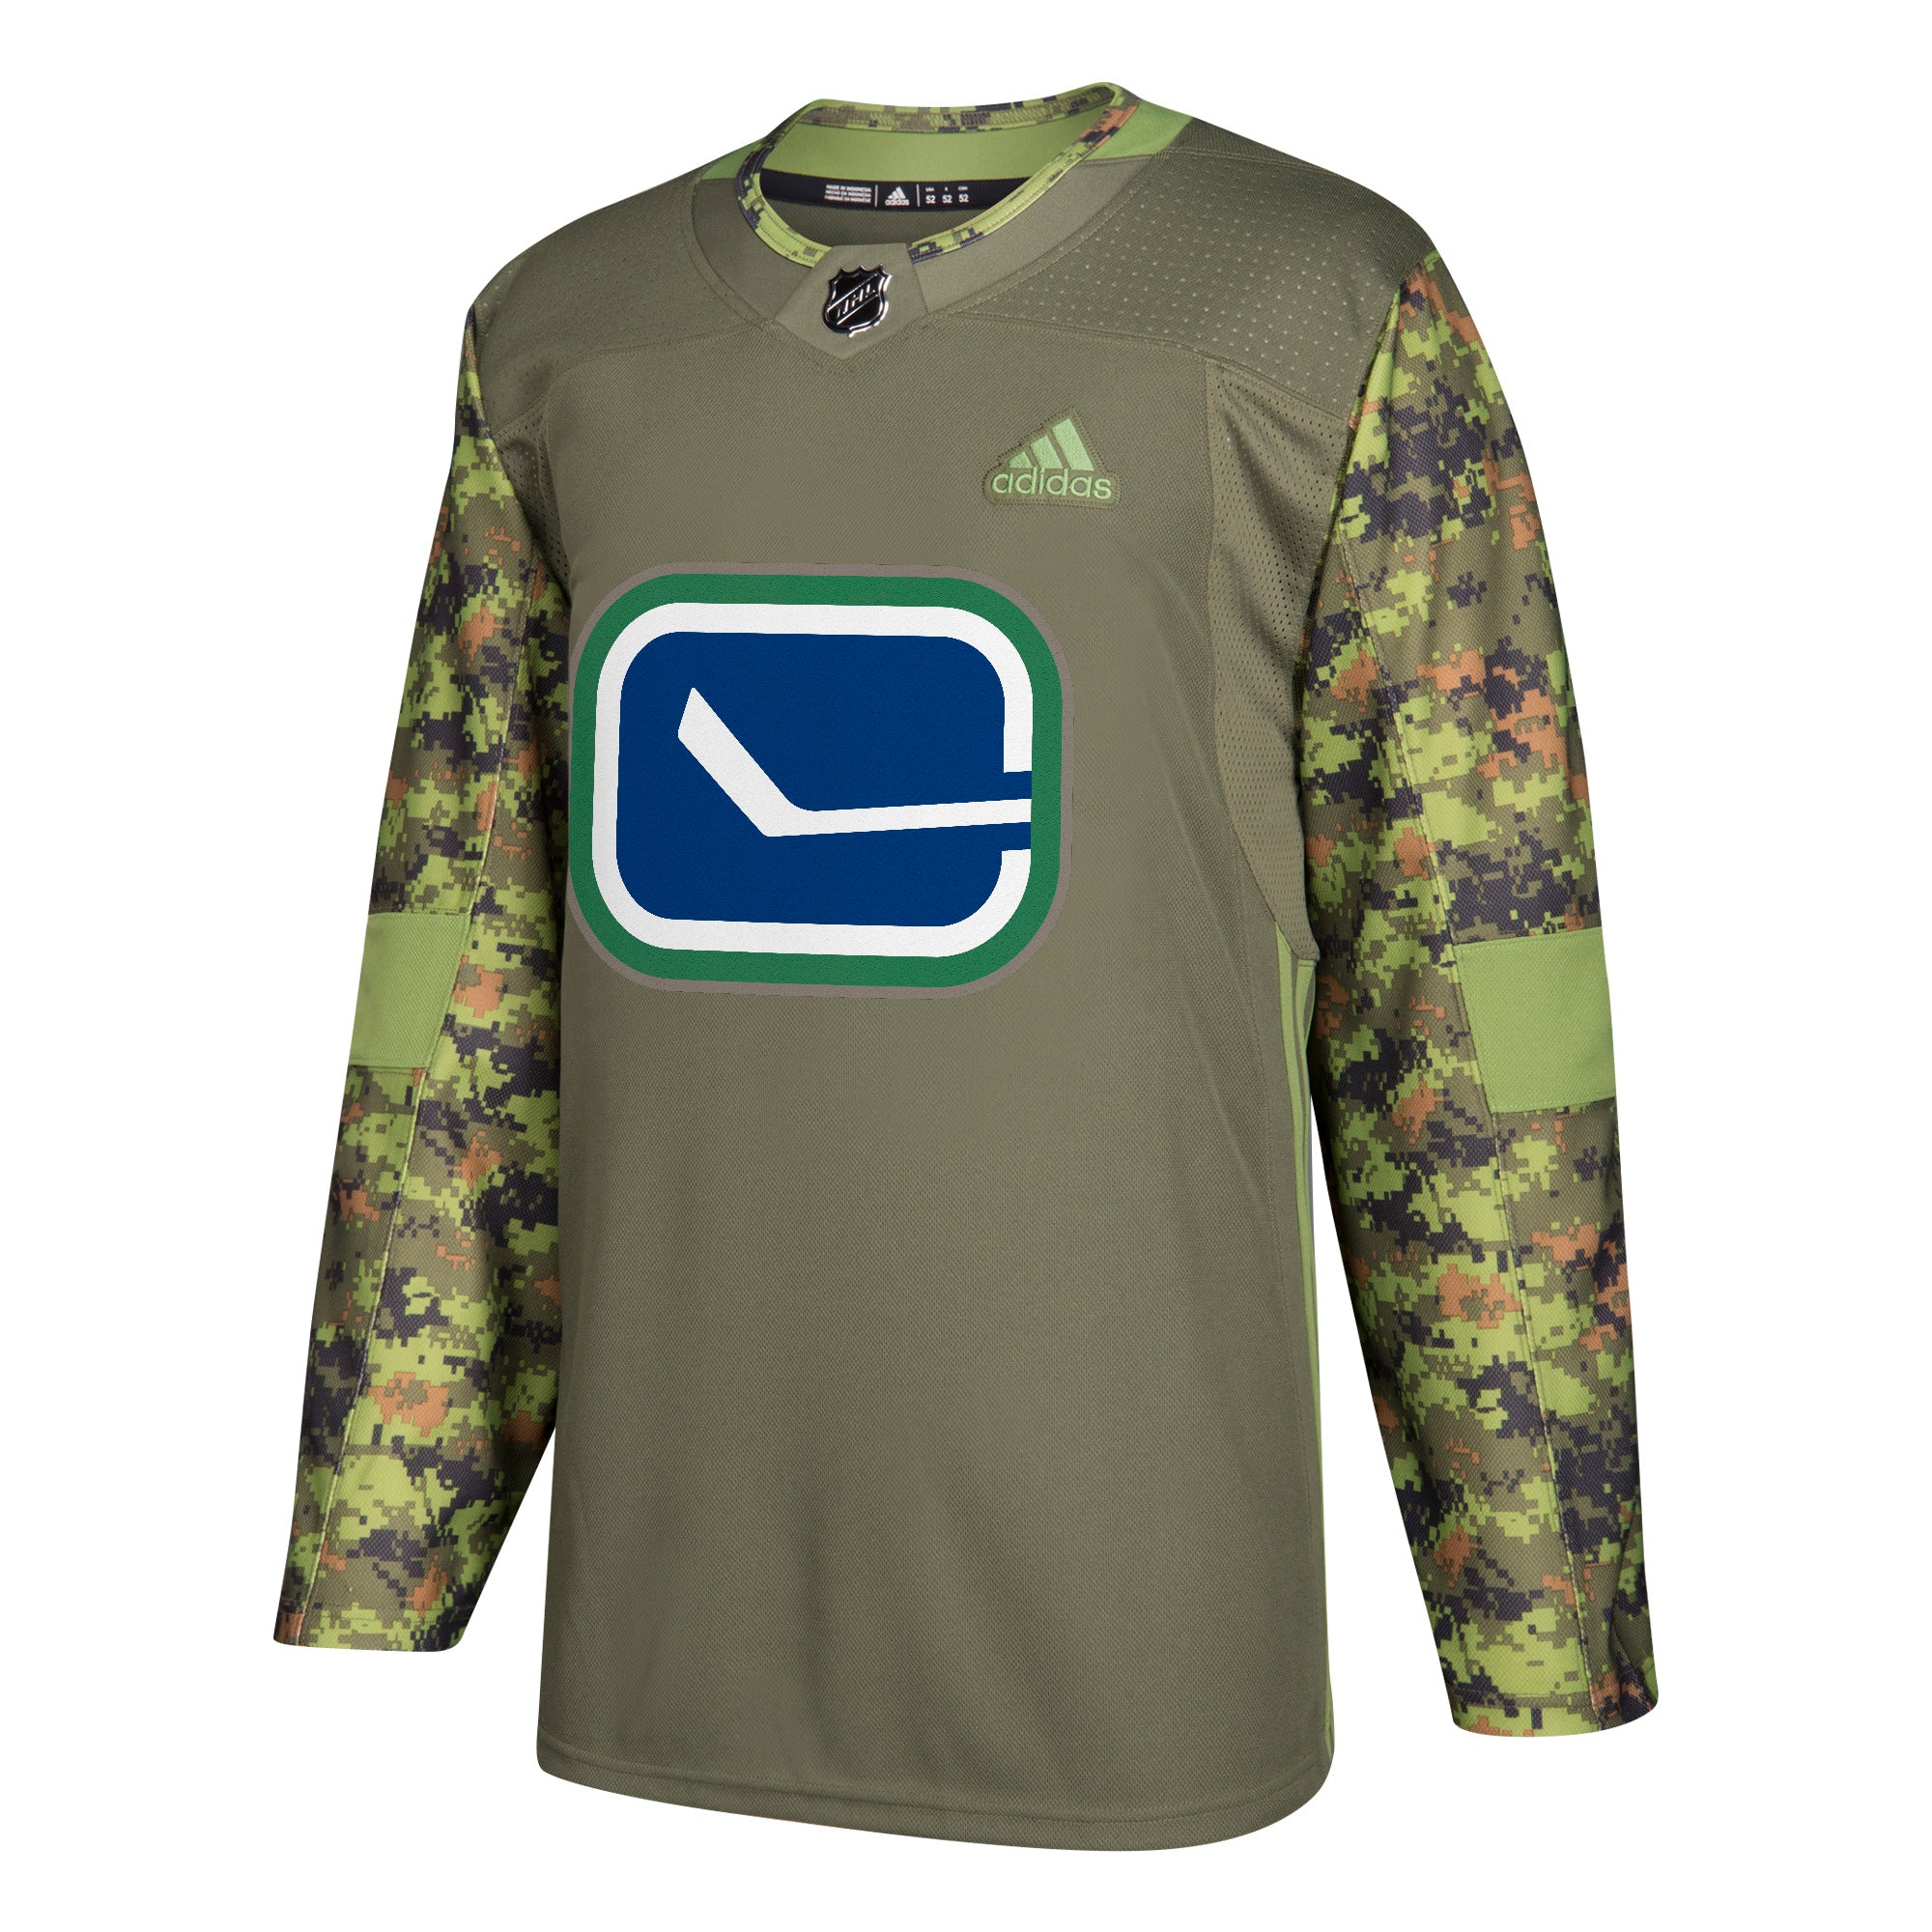 Vancouver Canucks Adidas Authentic Third Alternate NHL Hockey